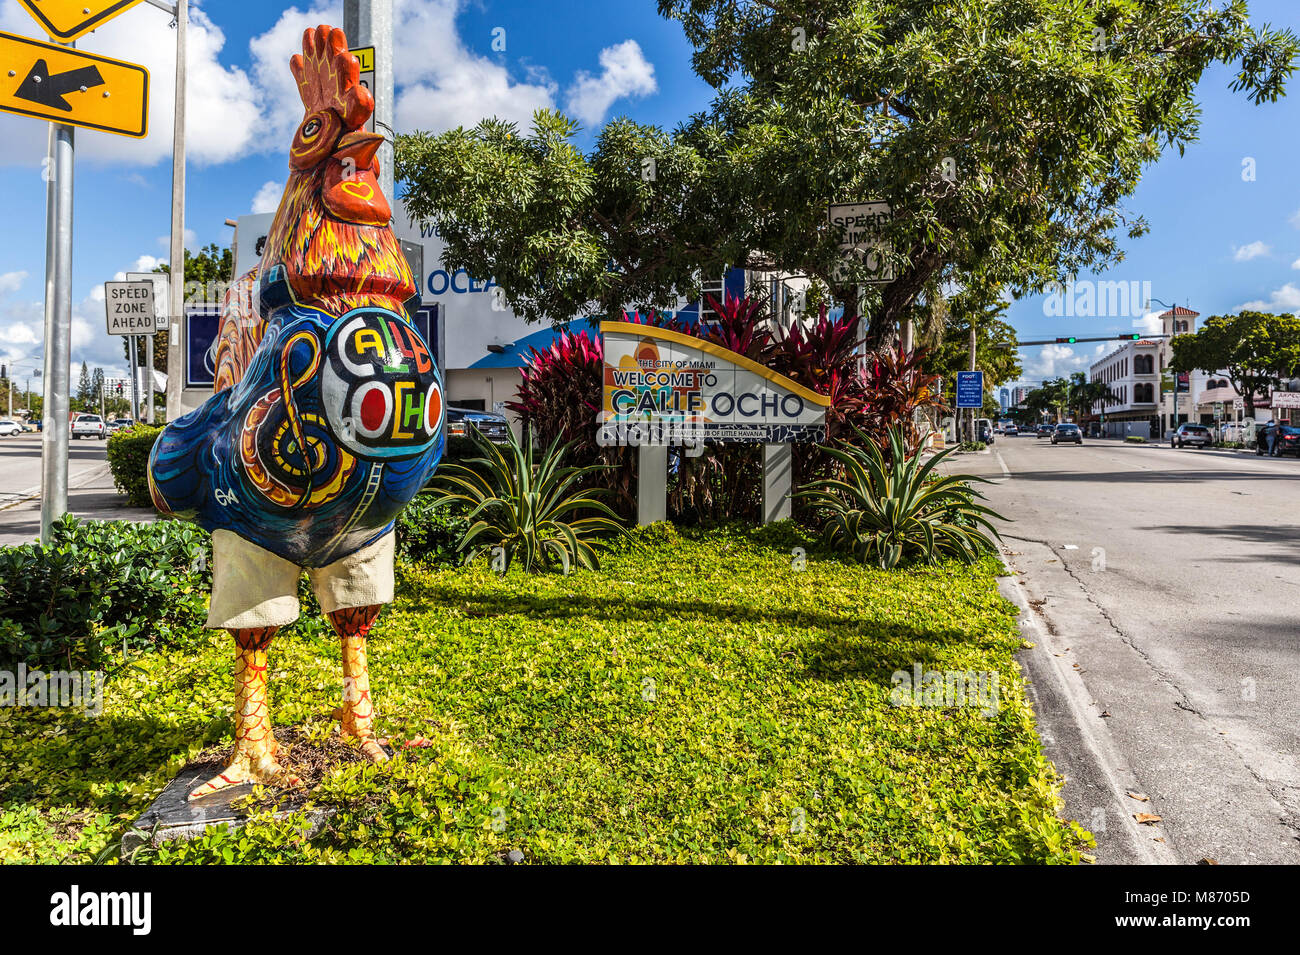 Große und farbenfrohe Hahn Skulptur am Straßenrand, Calle Ocho, Little Havana, Miami, Florida, USA. Stockfoto